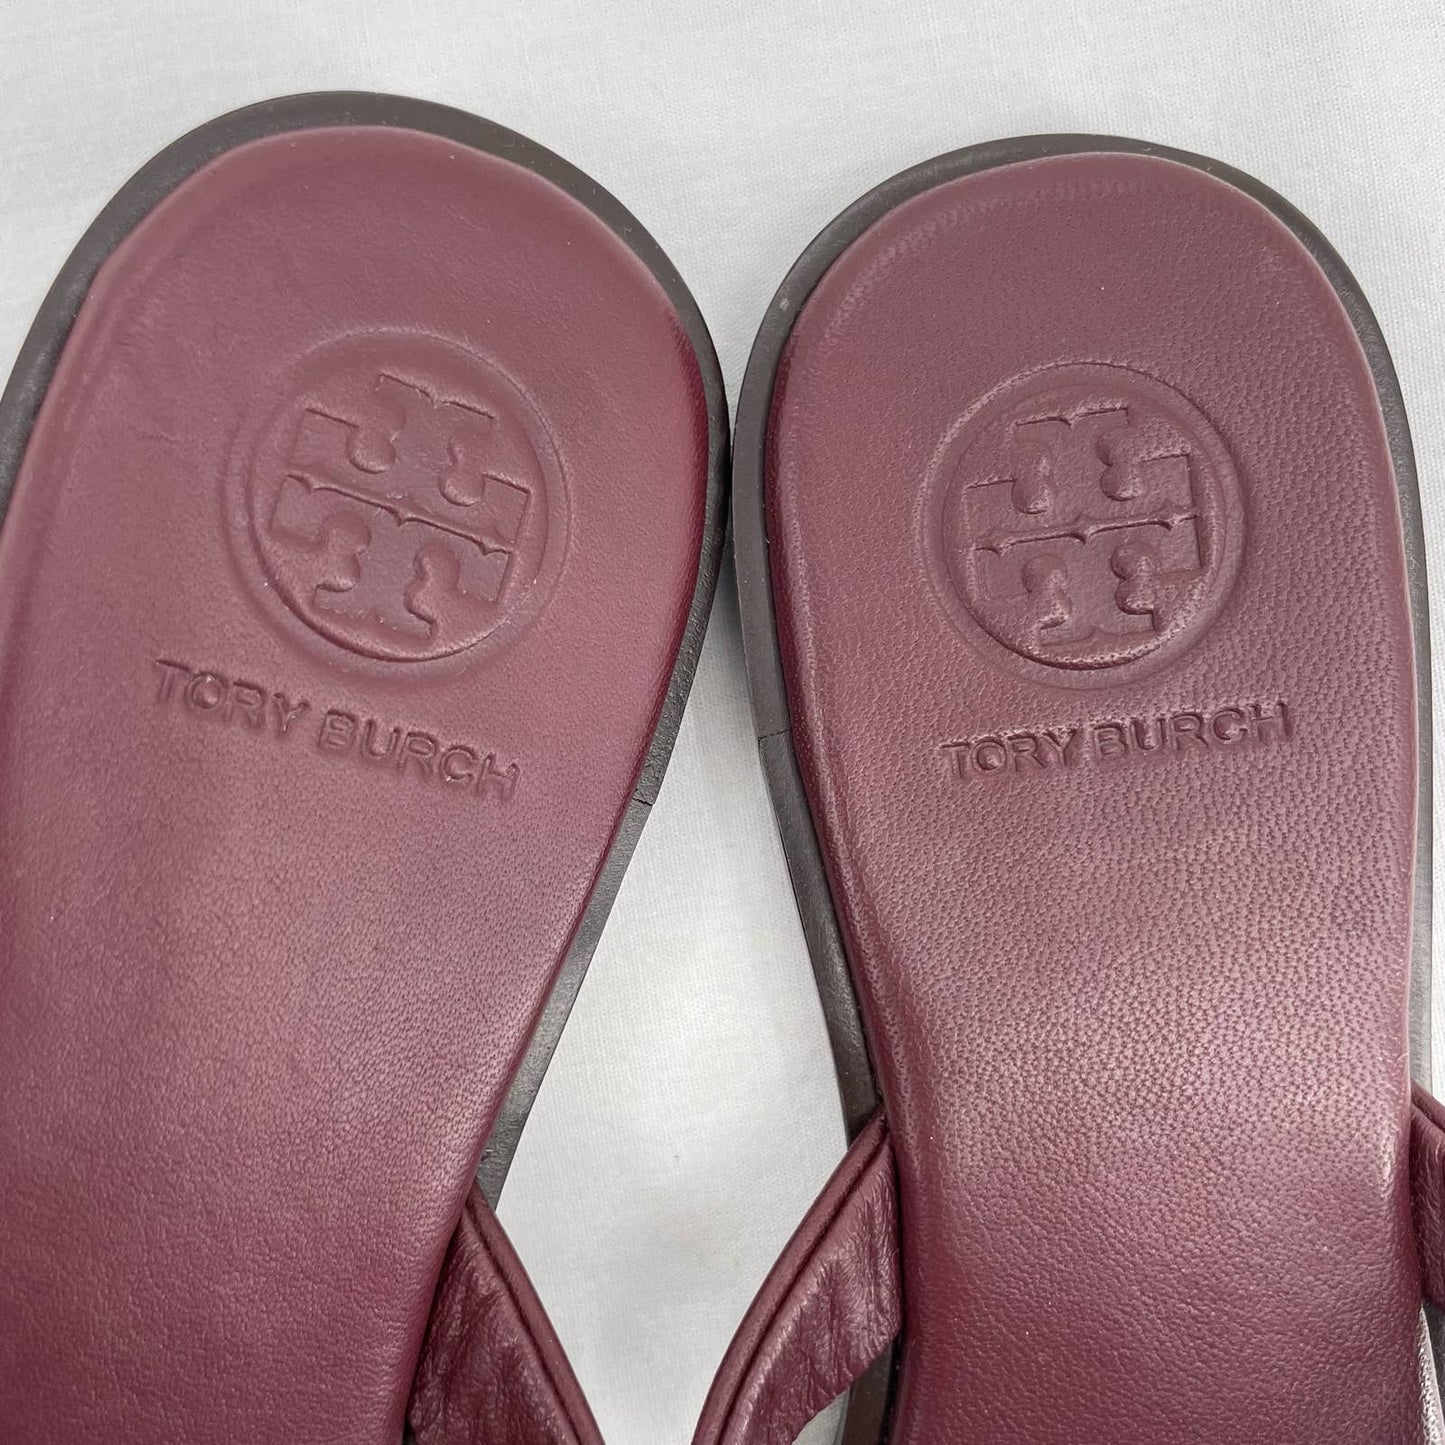 Tory Burch Benton Thong Sandals New Claret Wine Burgundy Logo Medallion Size 7